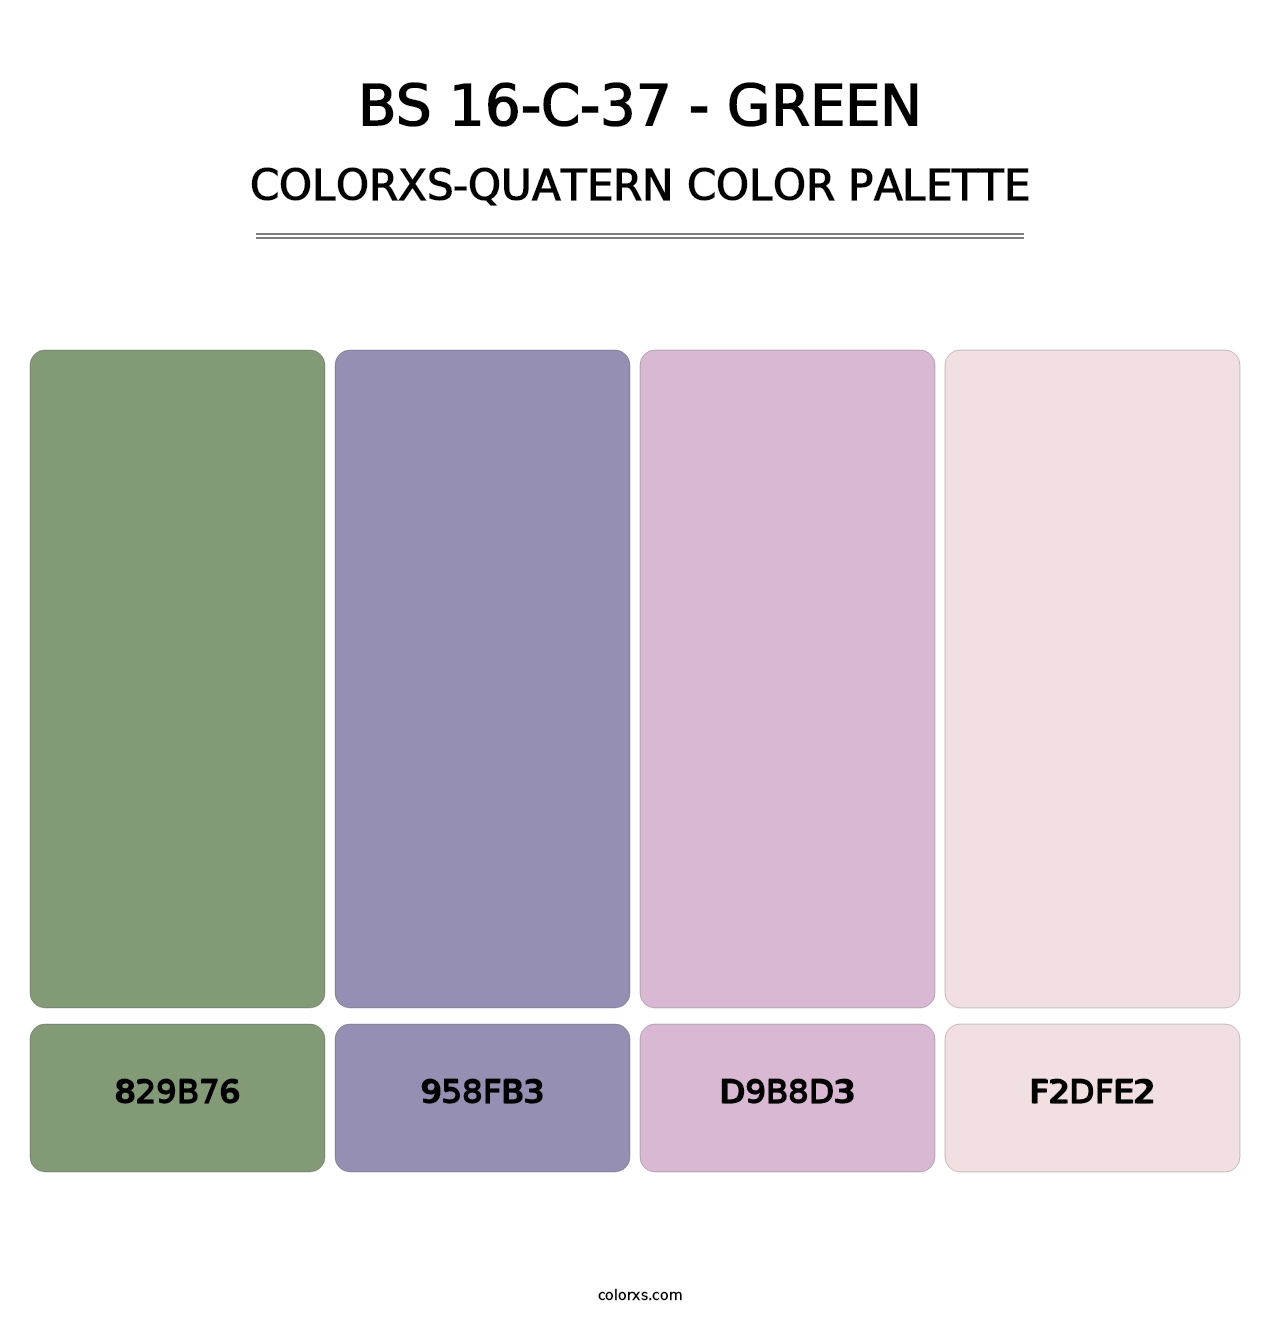 BS 16-C-37 - Green - Colorxs Quatern Palette